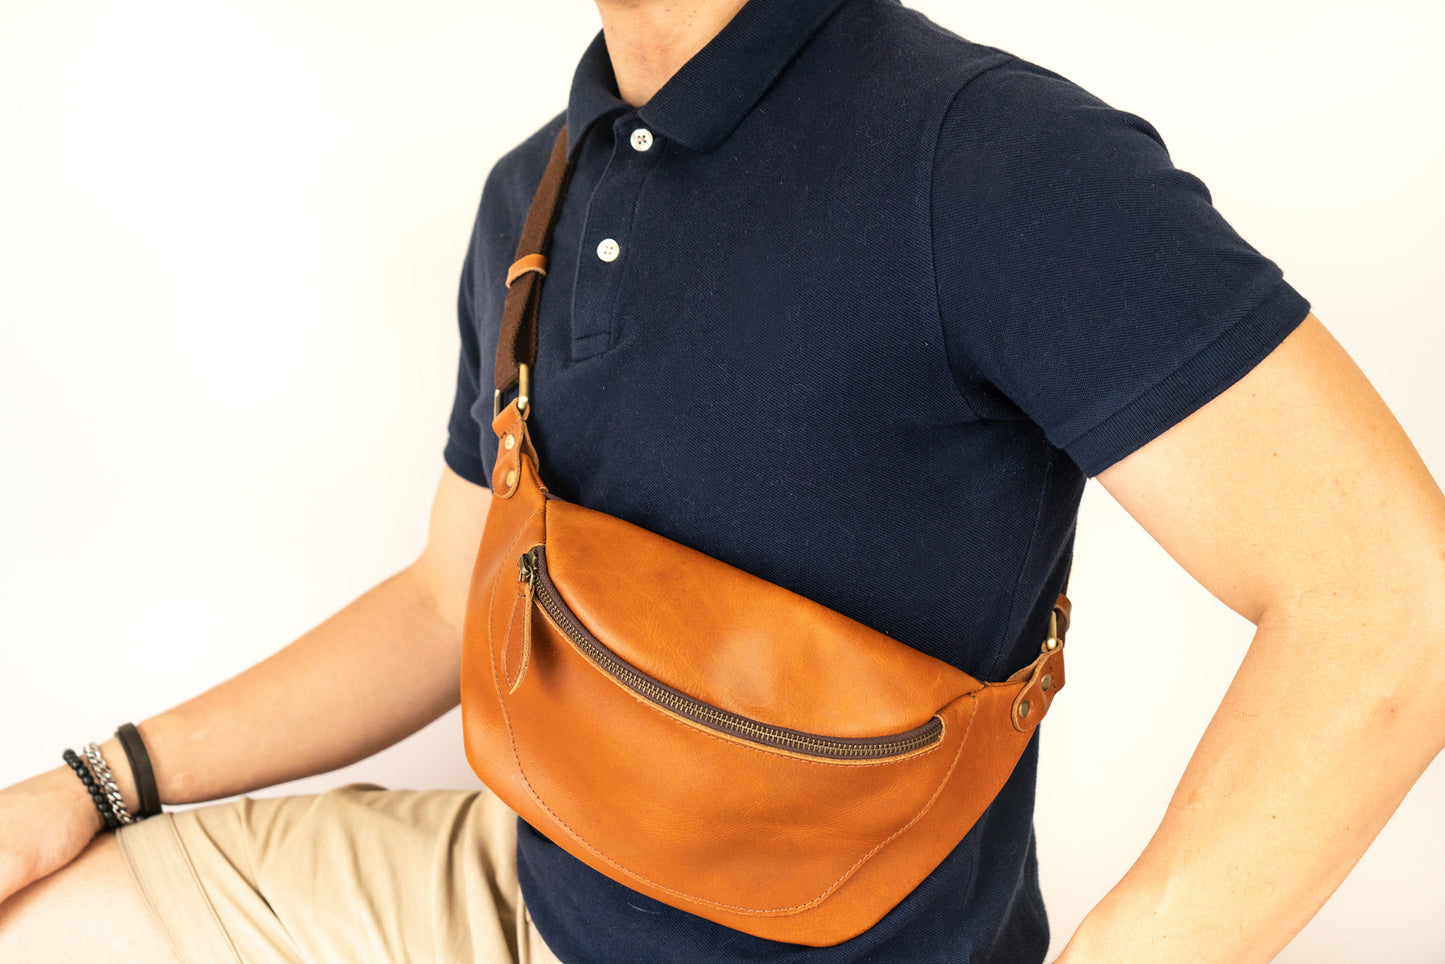 Leather Belt Bag | Dark Brown